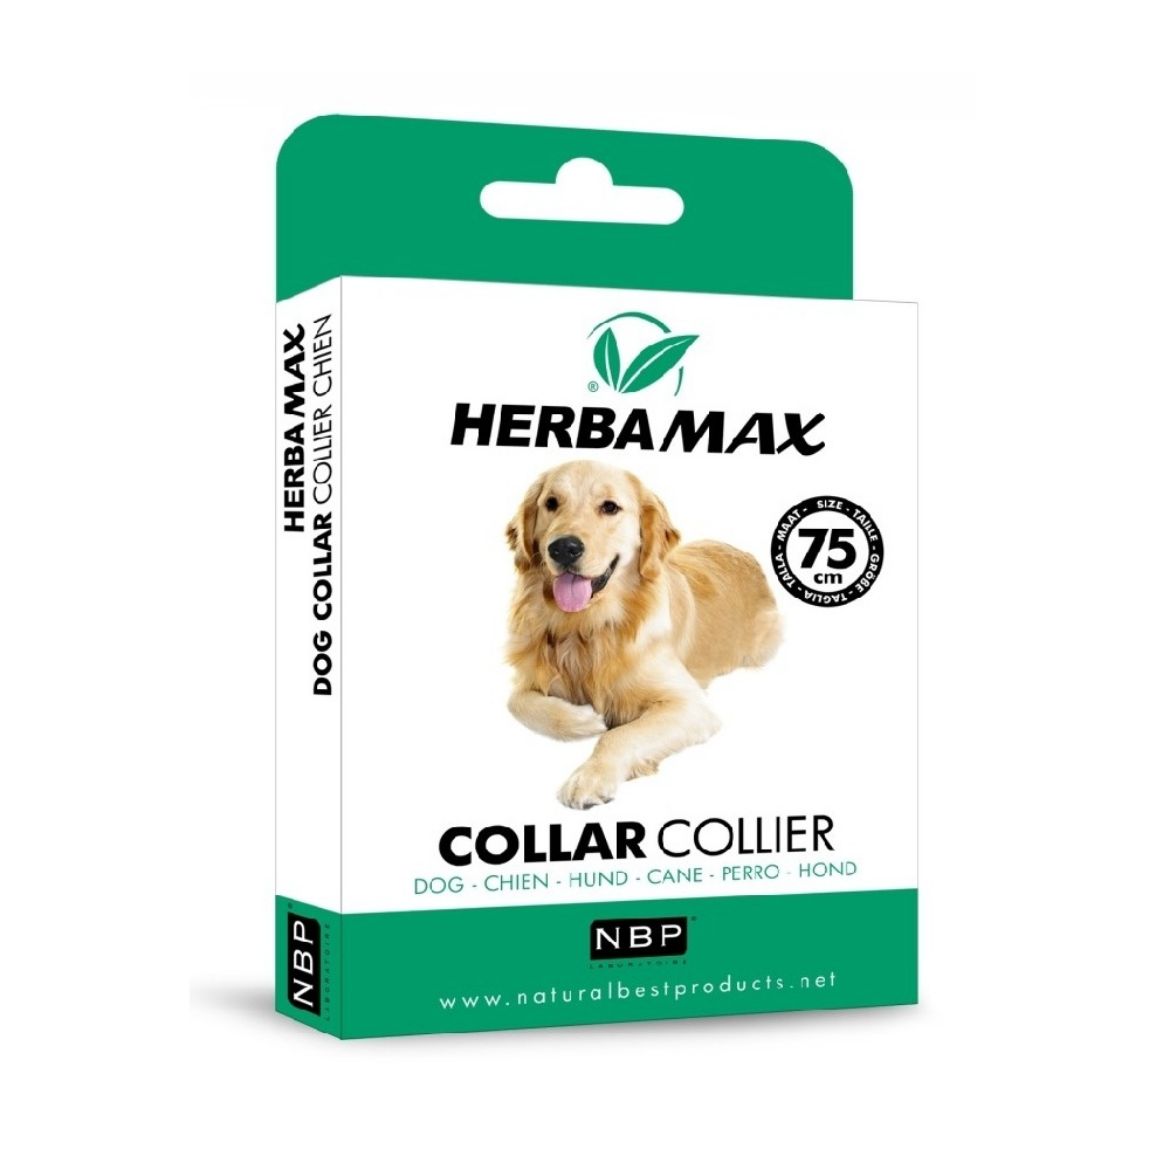 Obrázek z Herba Max Collar Dog repelentní obojek, pes 75 cm 